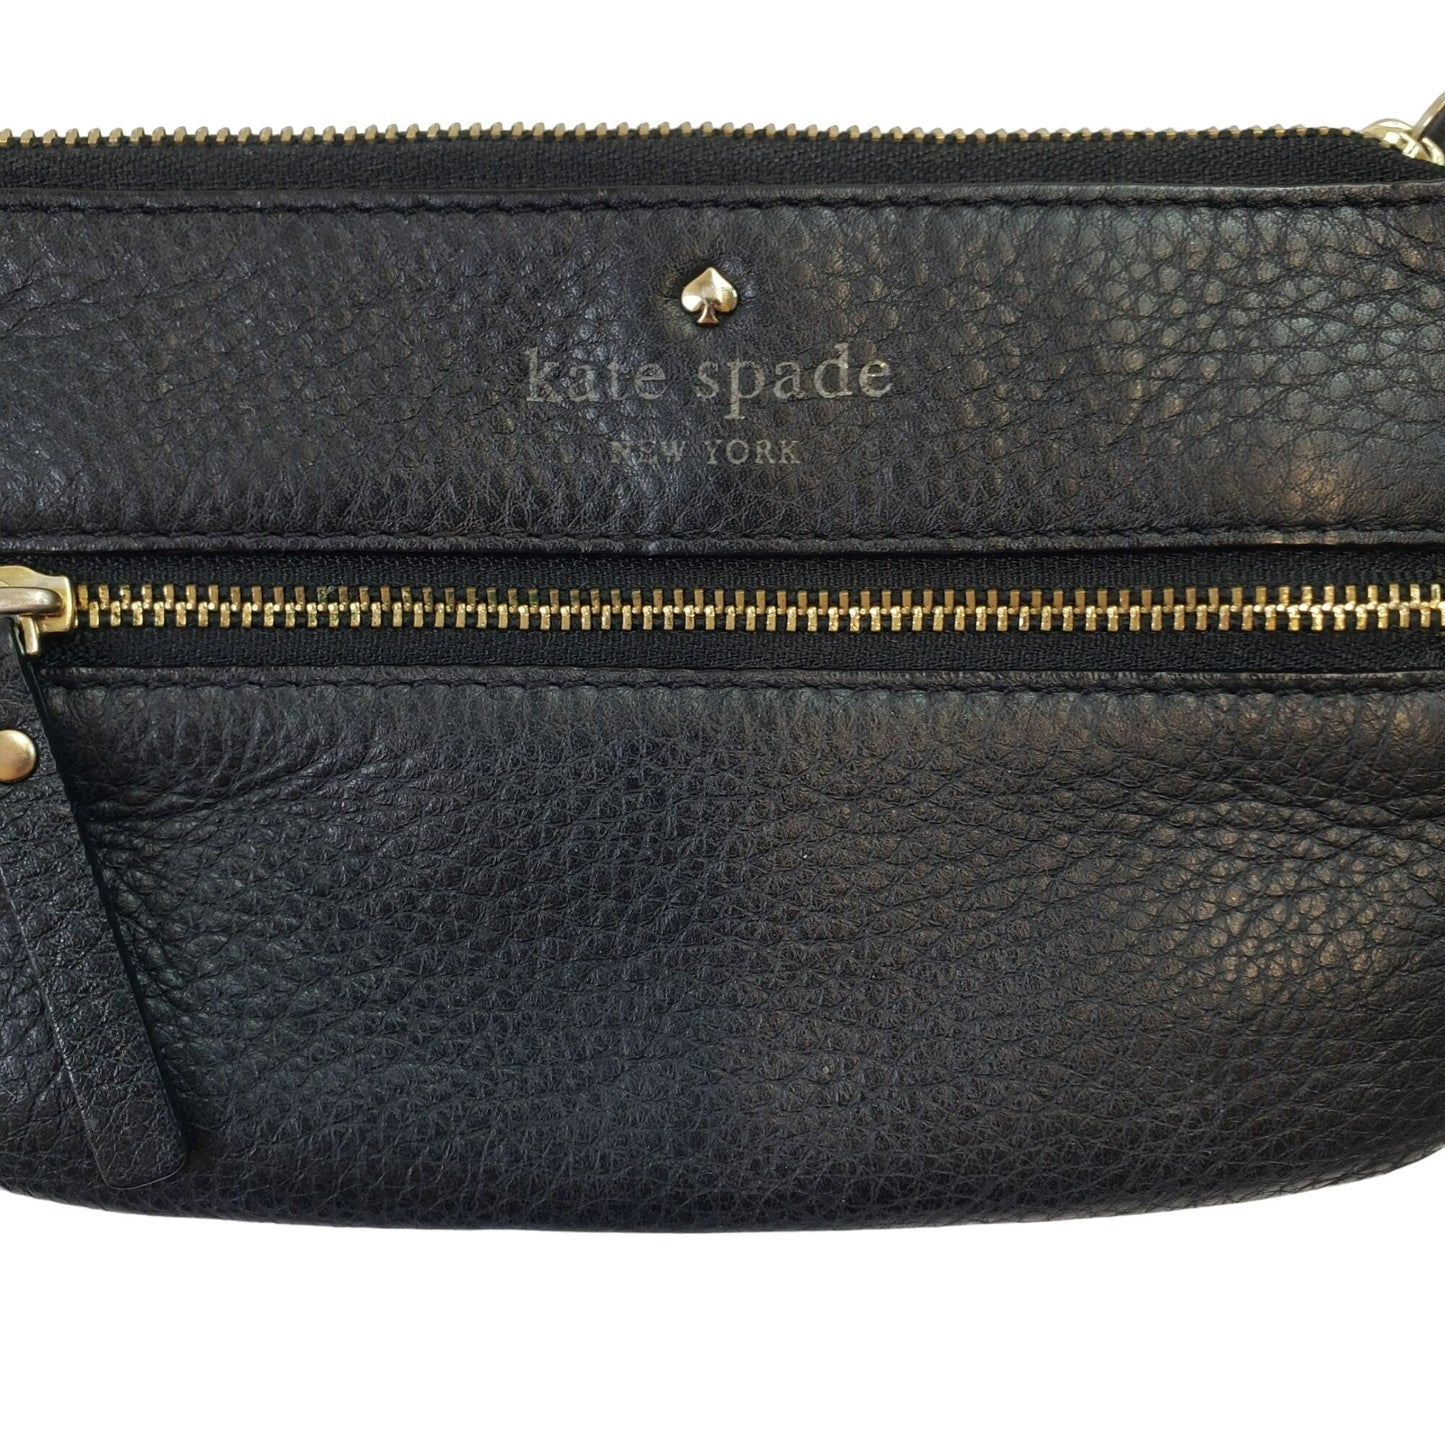 Kate Spade Black Pebble Leather Wristlet Wallet